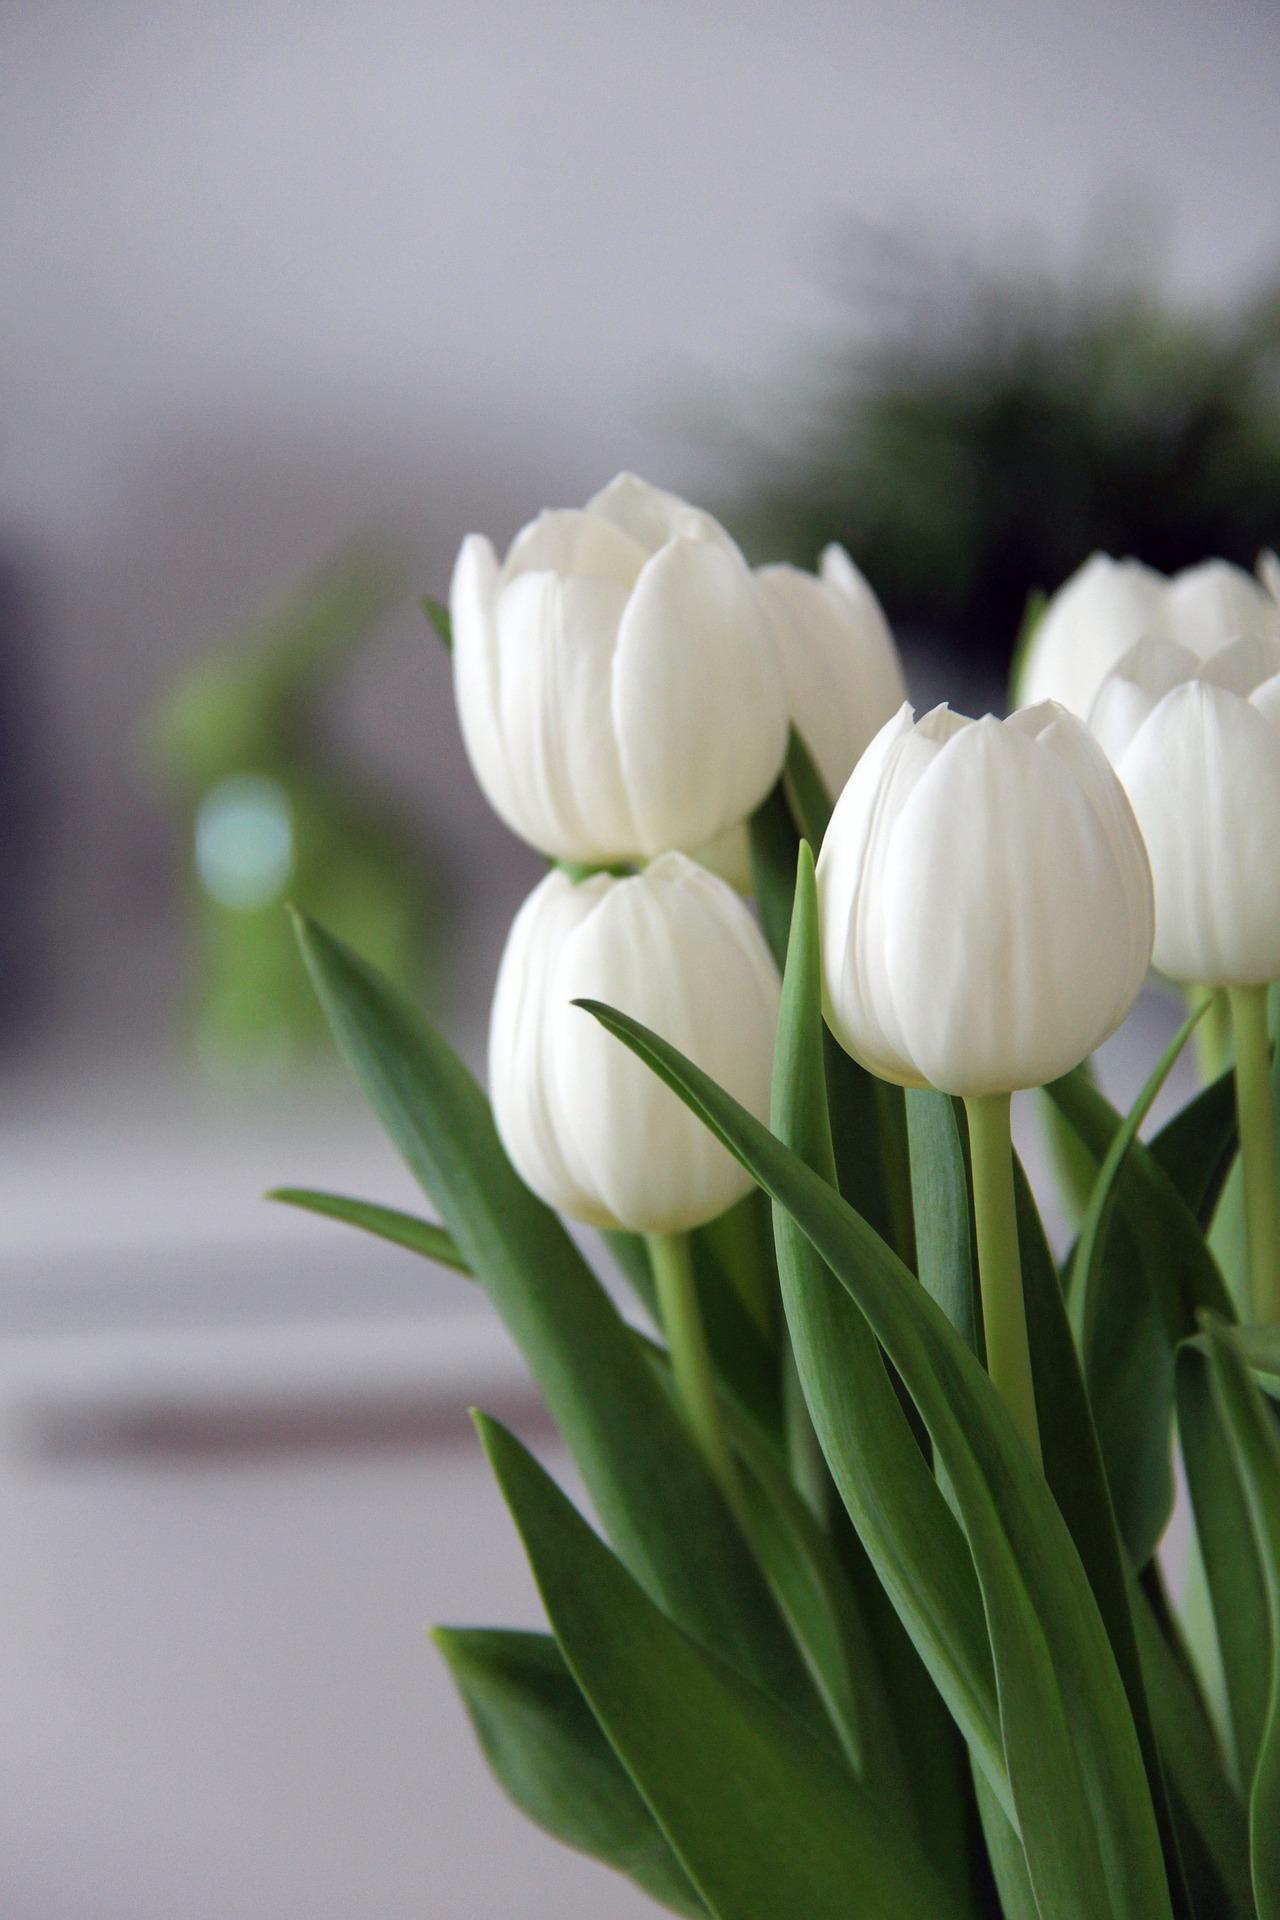 Tulip Single Early 'White Prince' - Tulip from Leo Berbee Bulb Company